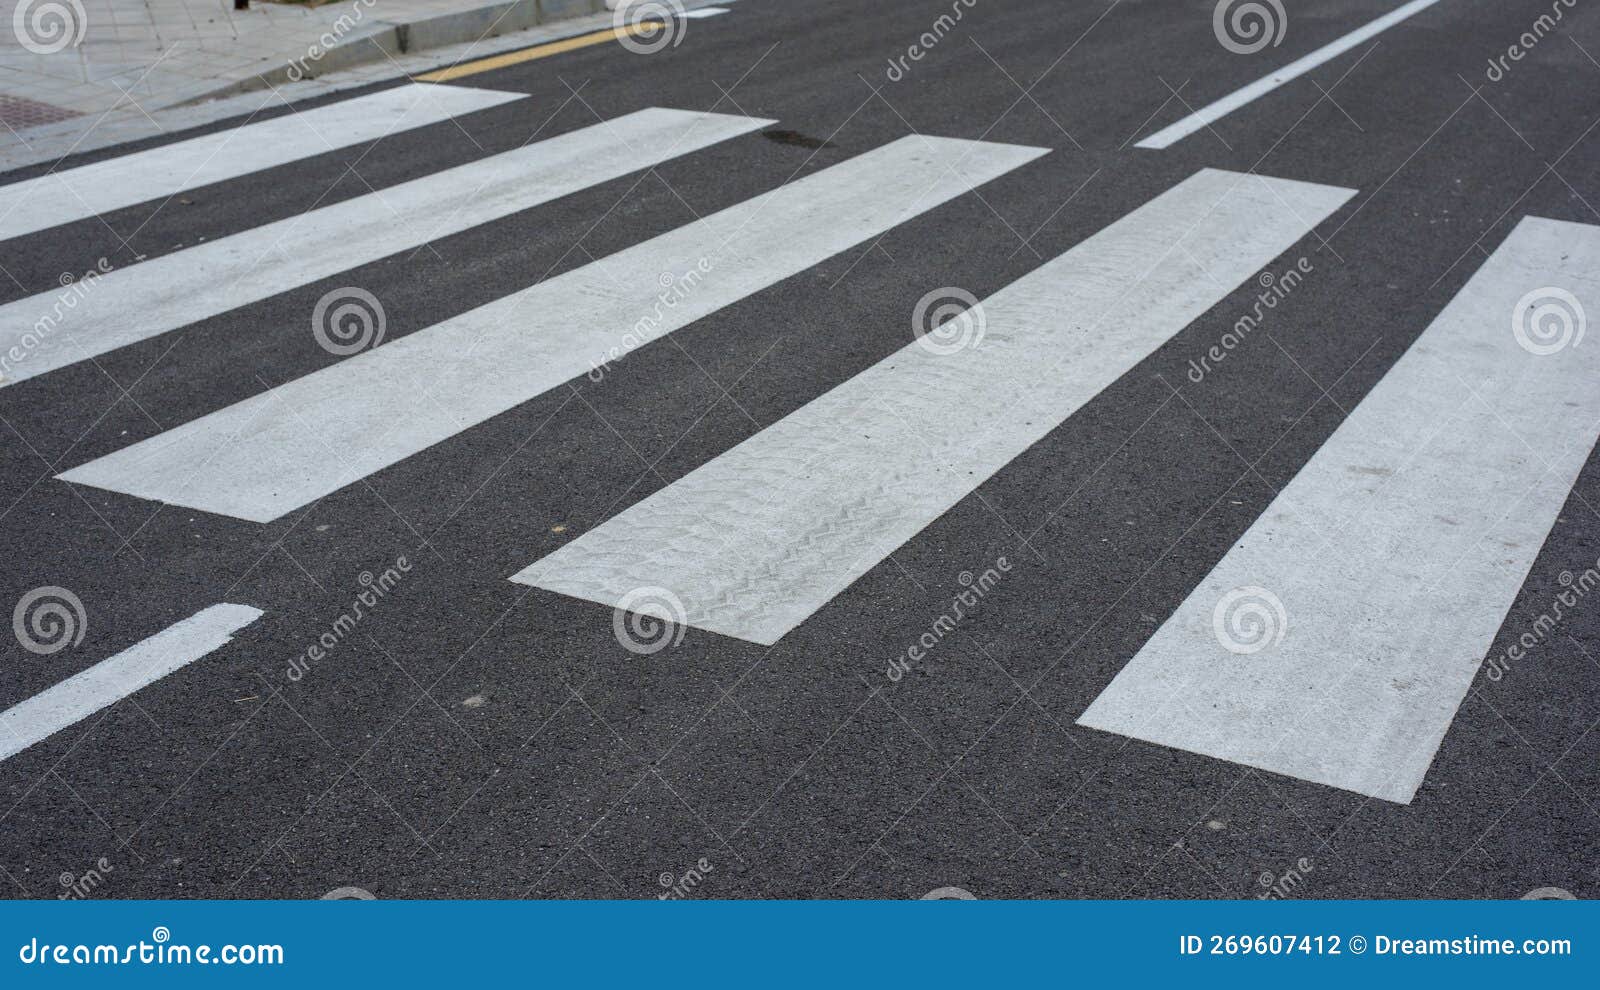 zebra crossing painted on the asphalt of a street